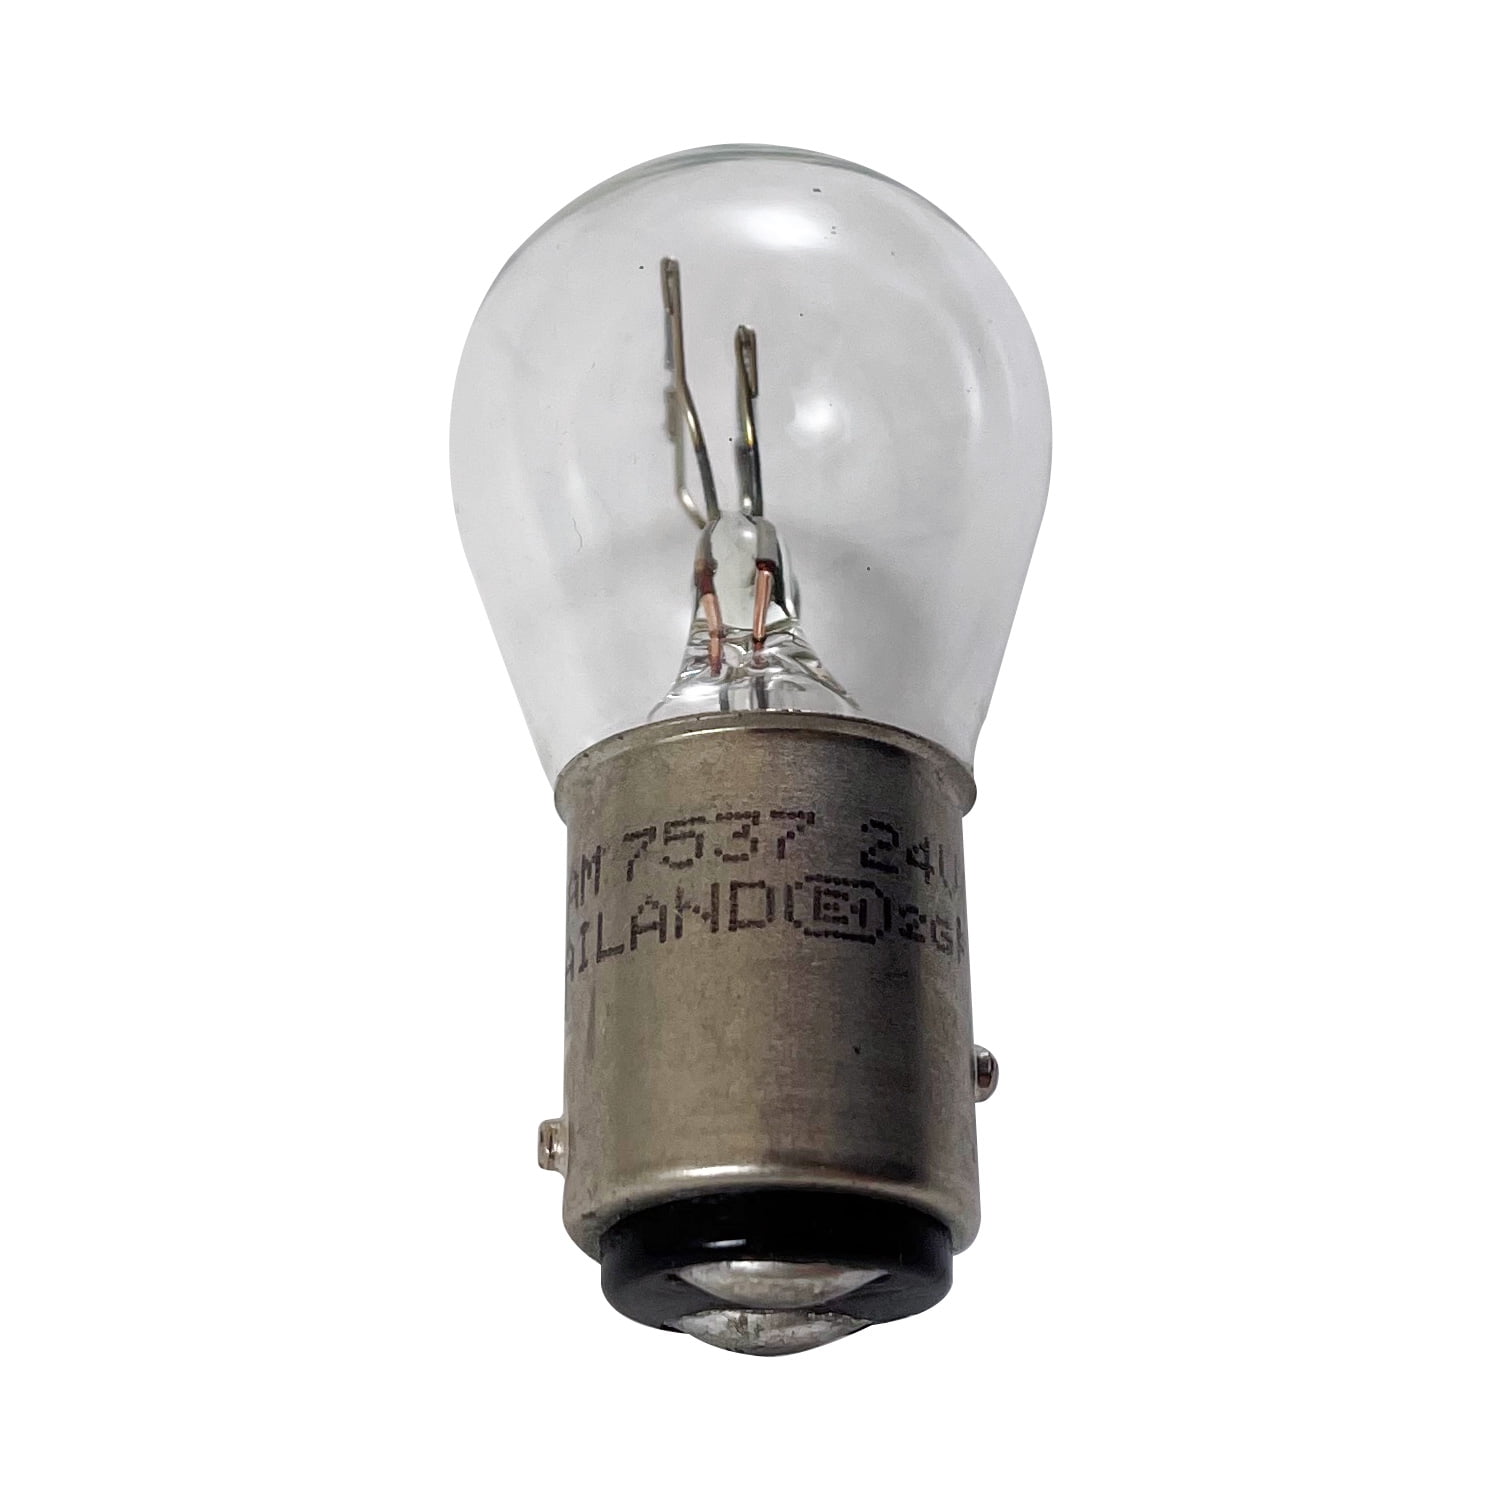 P21/5W LED Bulb Ultimate Ultra Power - 24 Leds CREE